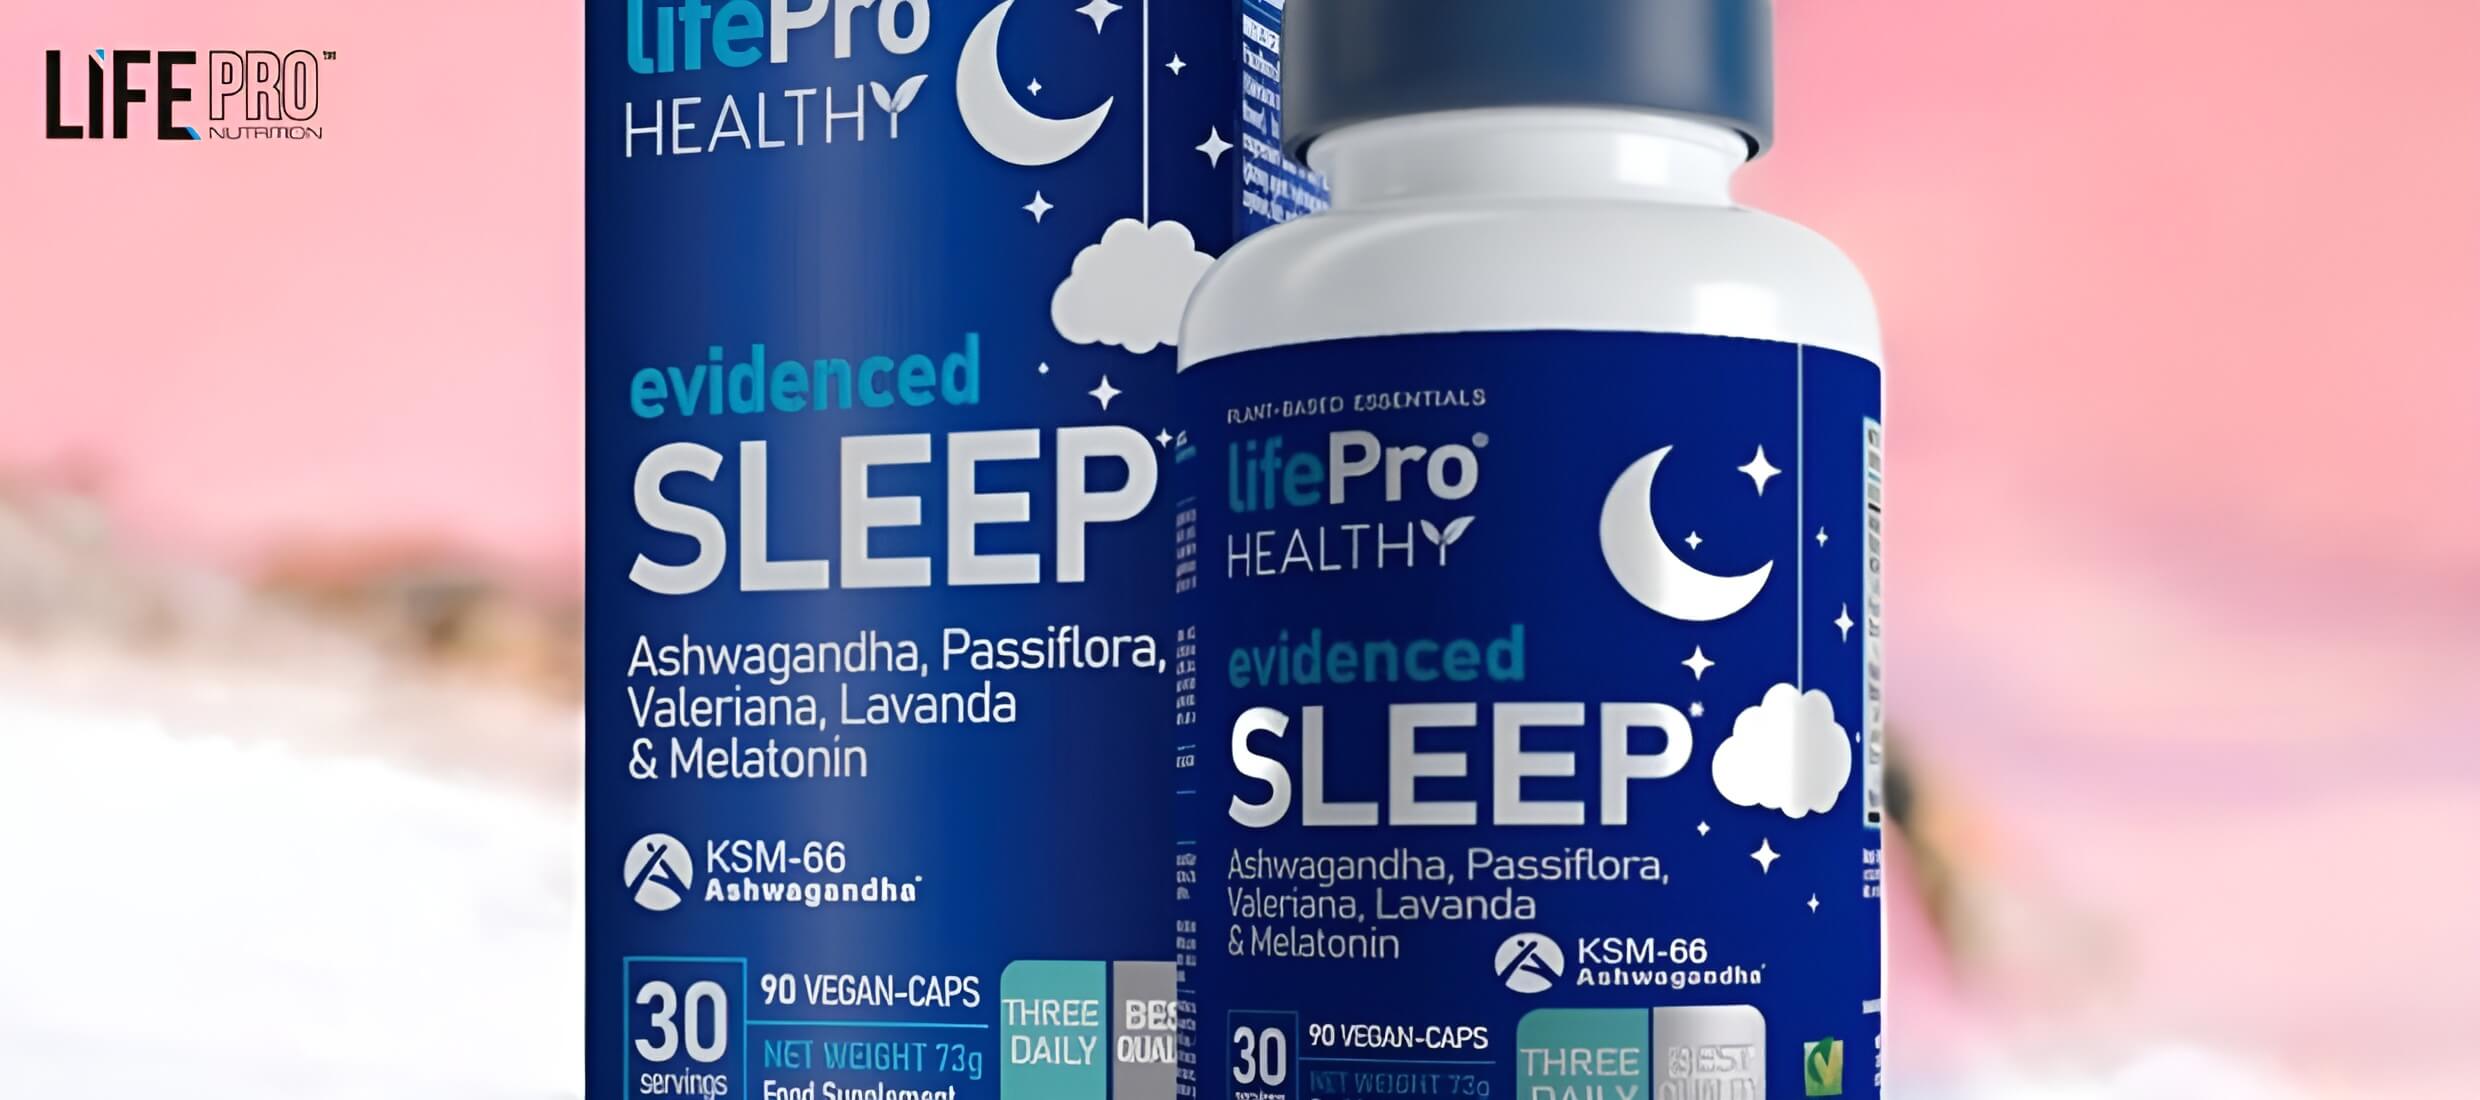 Evidenced Sleep Life Pro